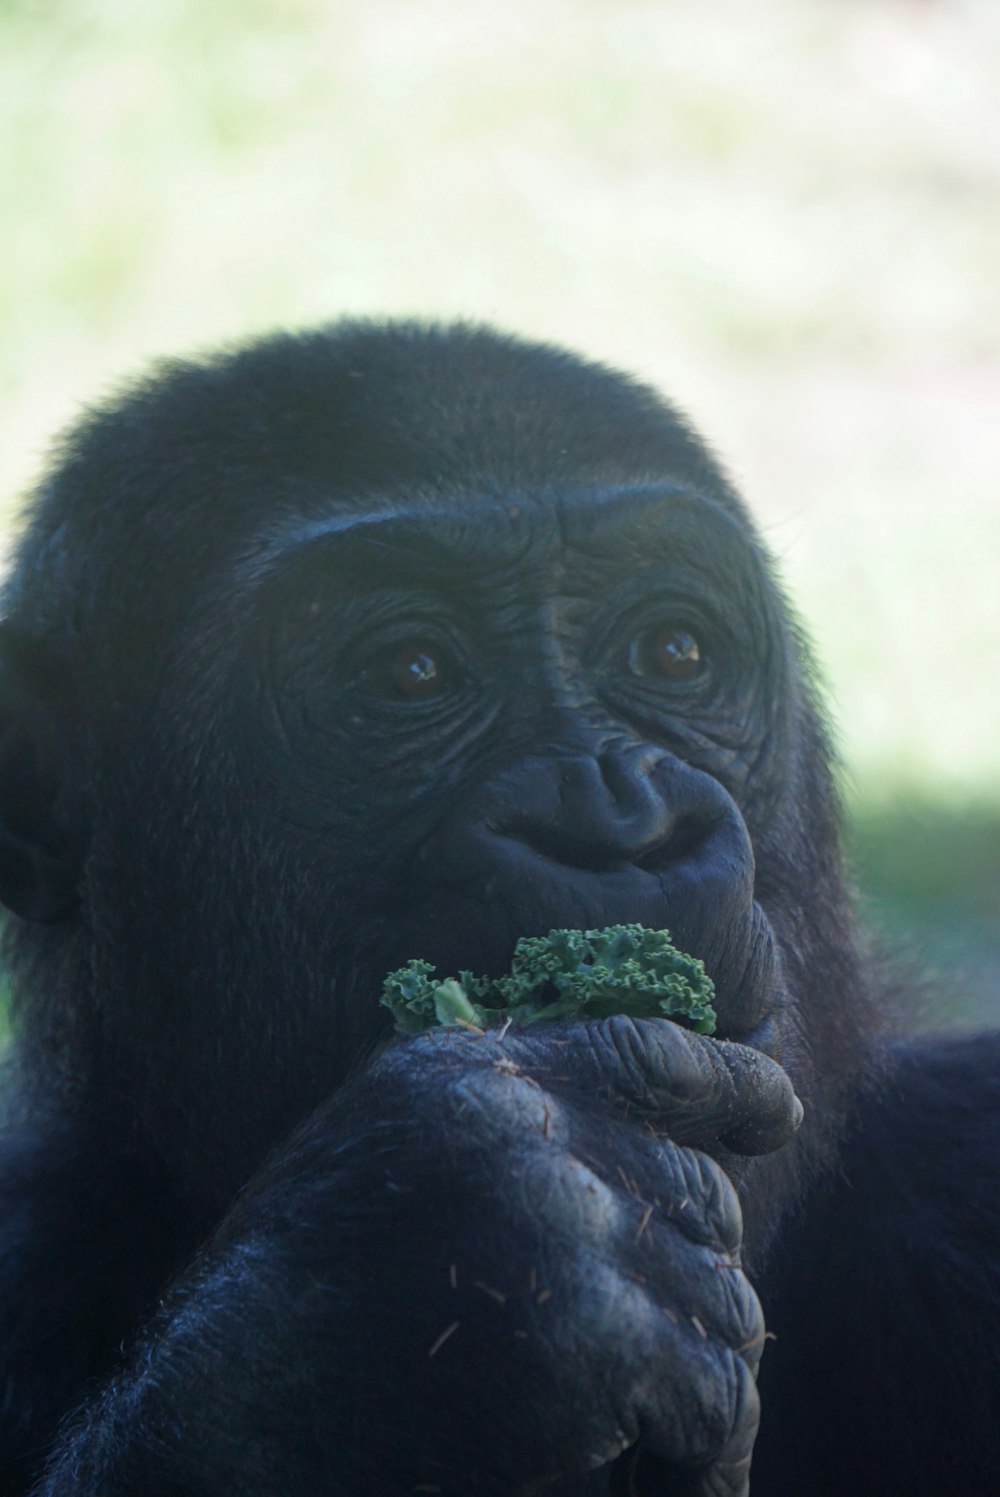 monkey eating vegetable